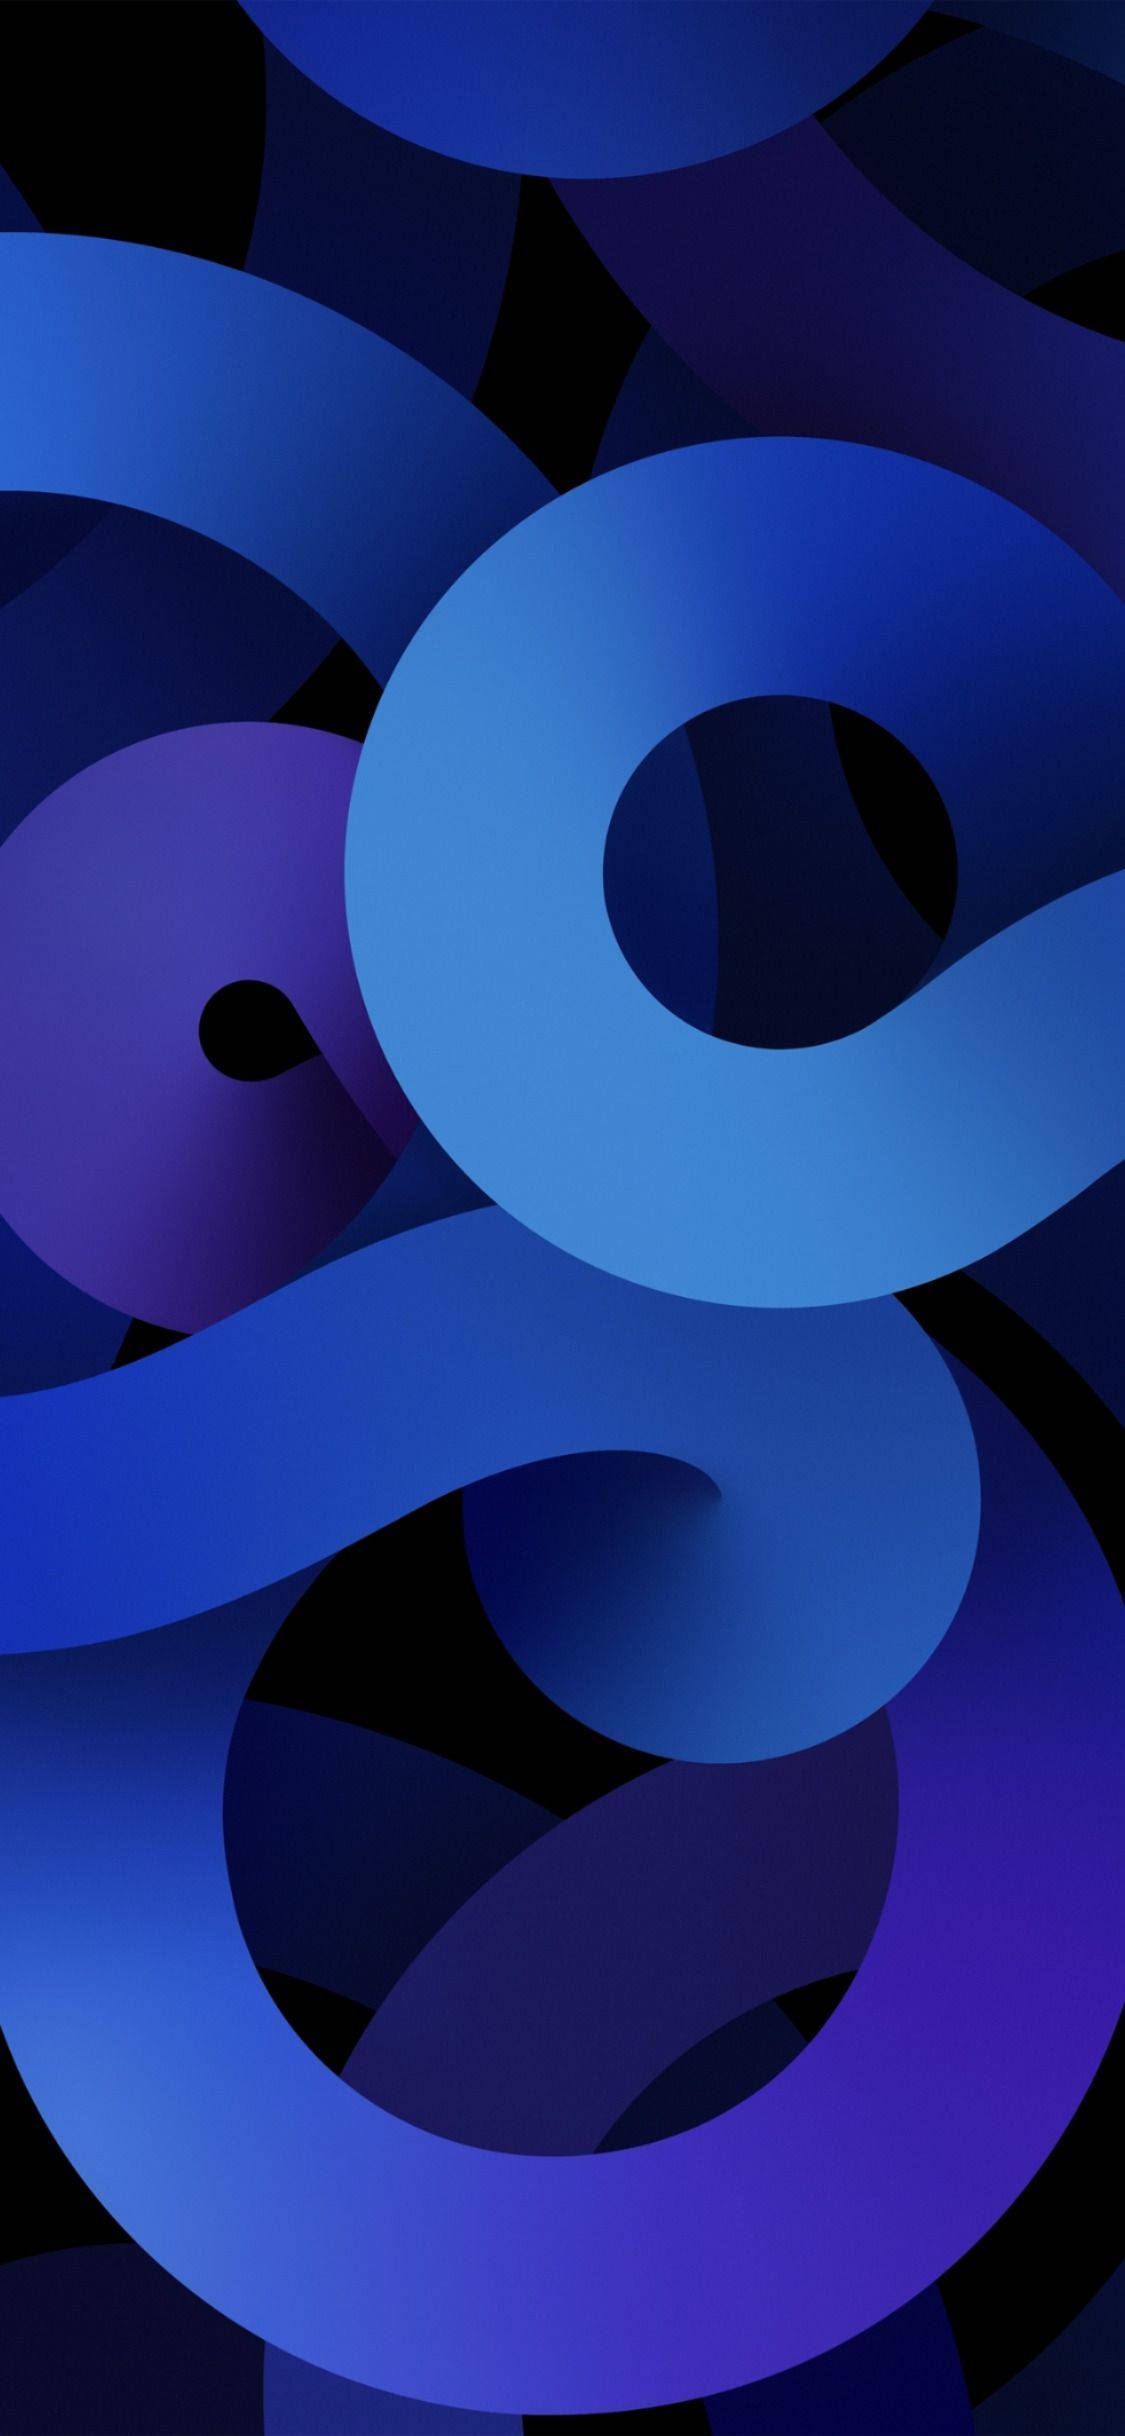 Blue Curves As Official Ipad Design Wallpaper